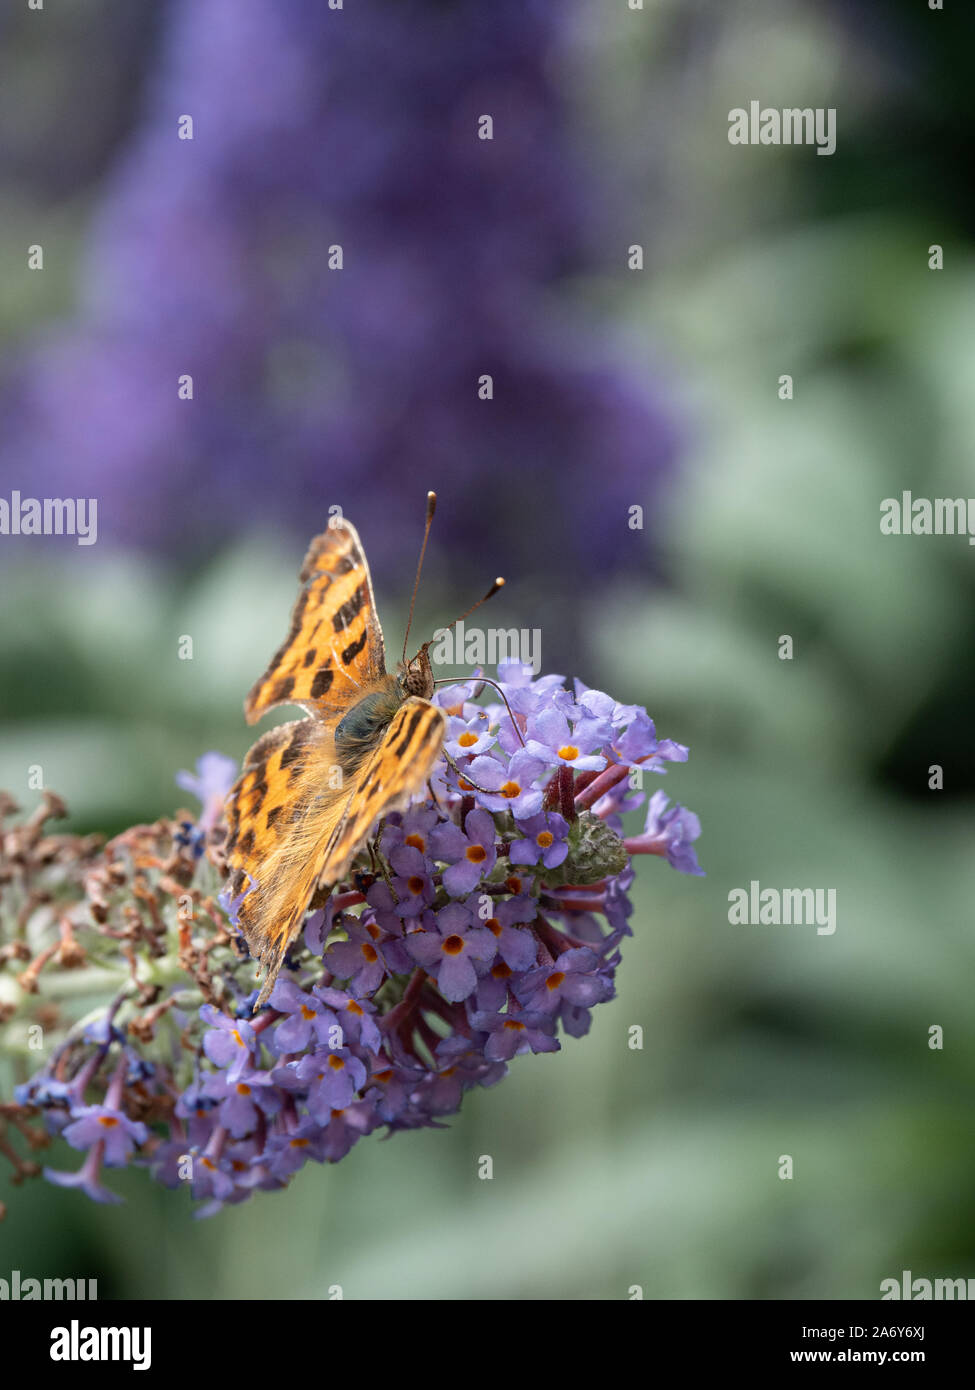 A comma butterfly wings spread feeding on a Buddleia flower spkie Stock Photo